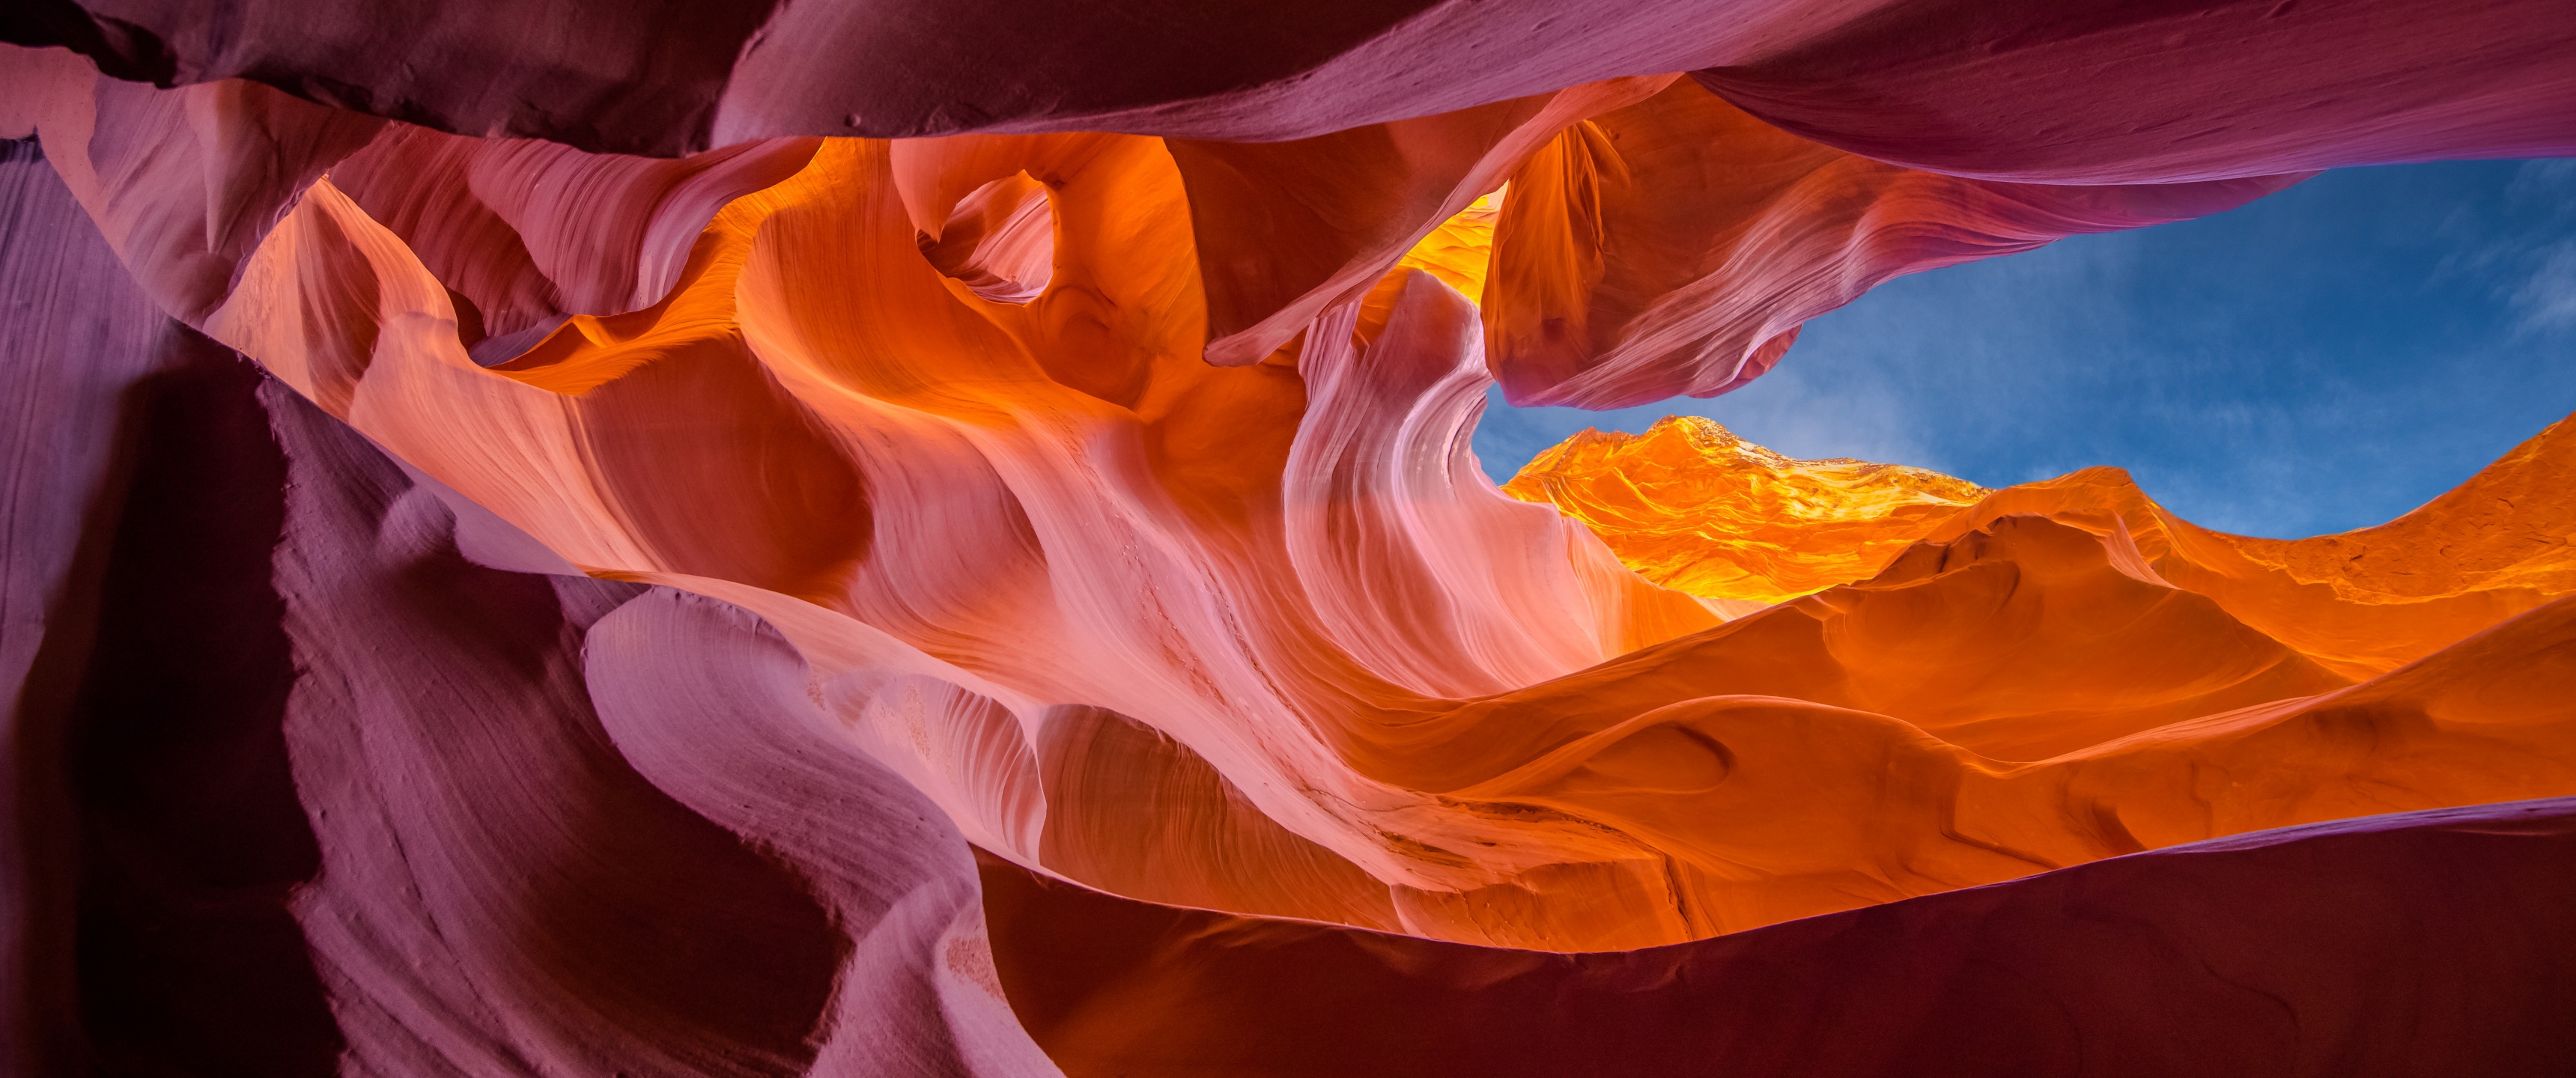 Best Antelope canyon iPhone HD Wallpapers  iLikeWallpaper